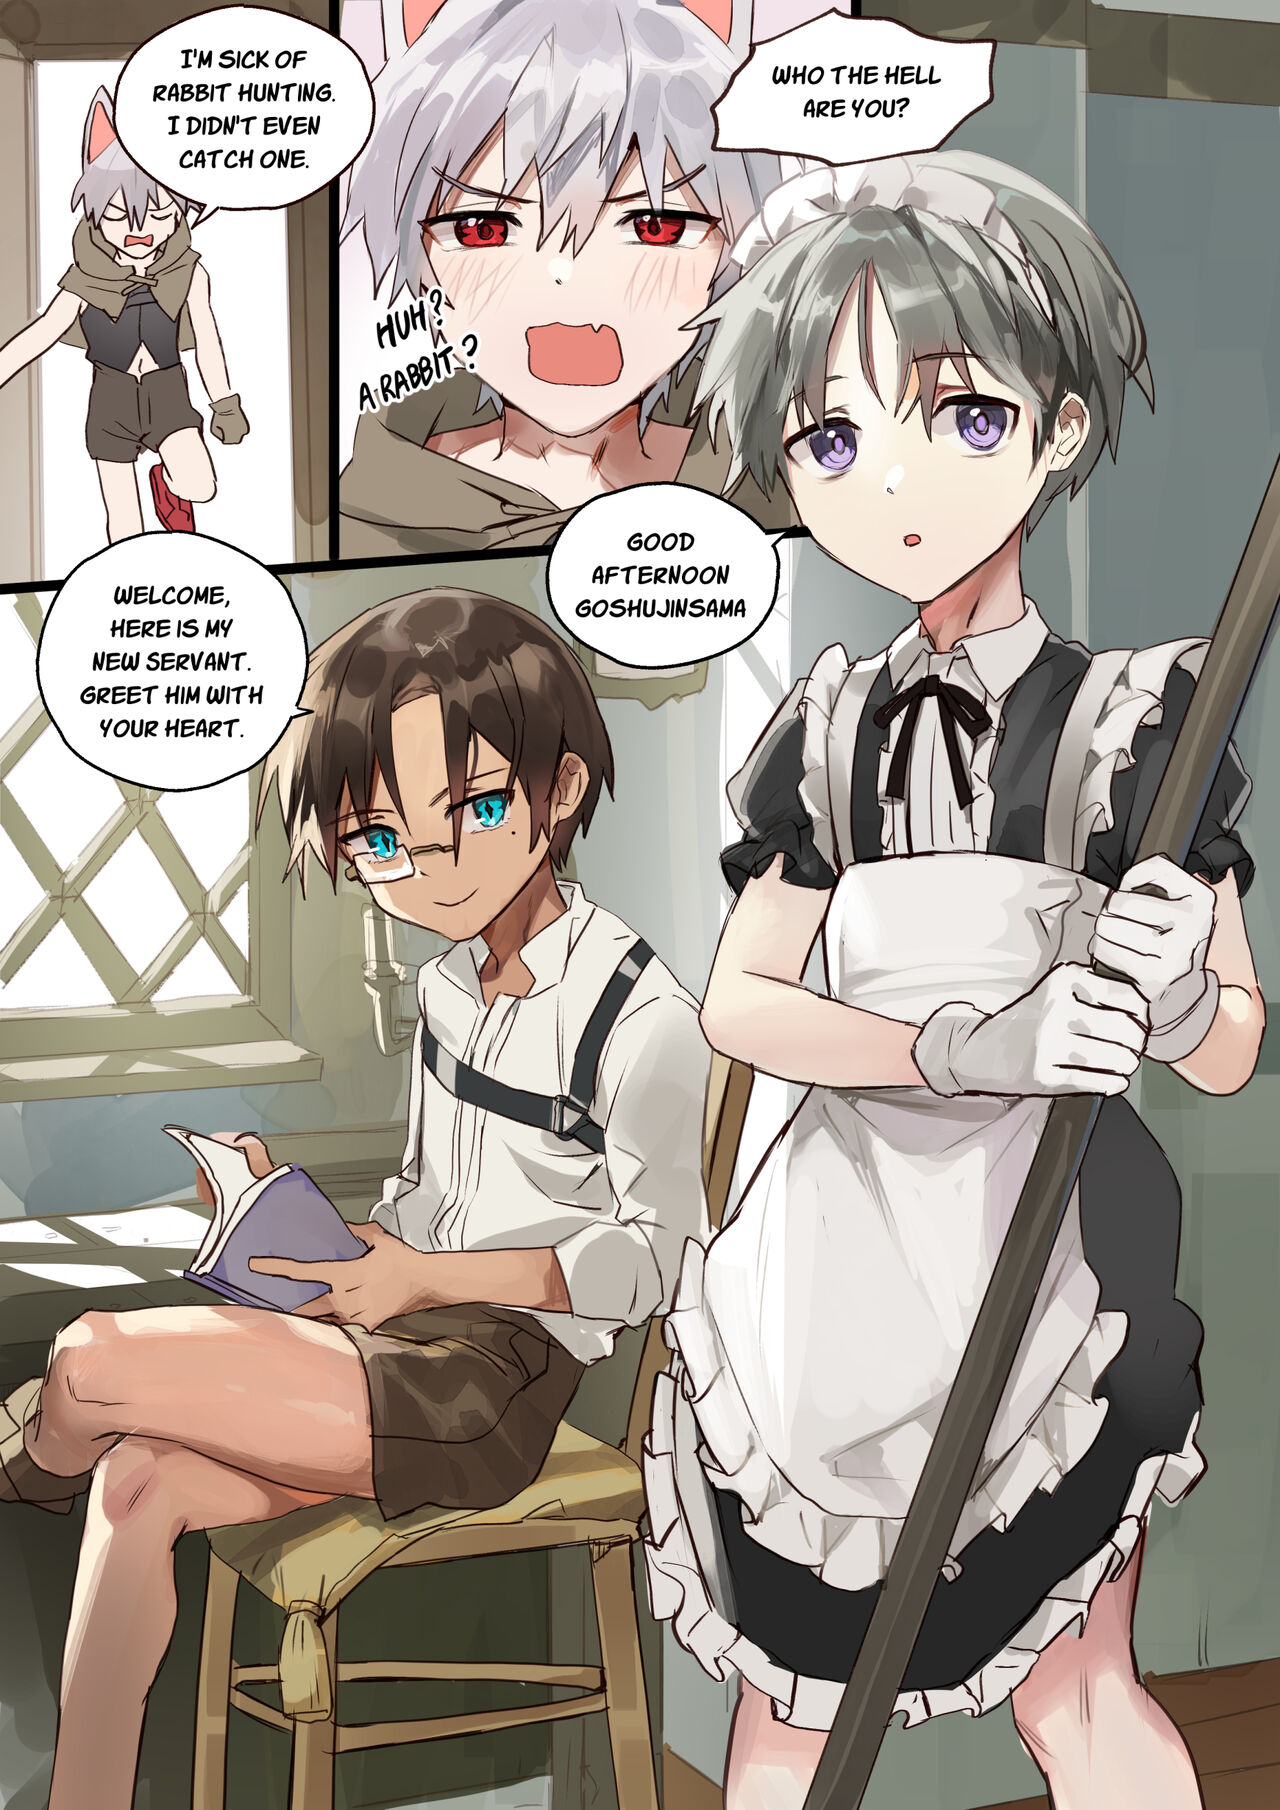 Boy Maid Boy - Page 2 - HentaiEra